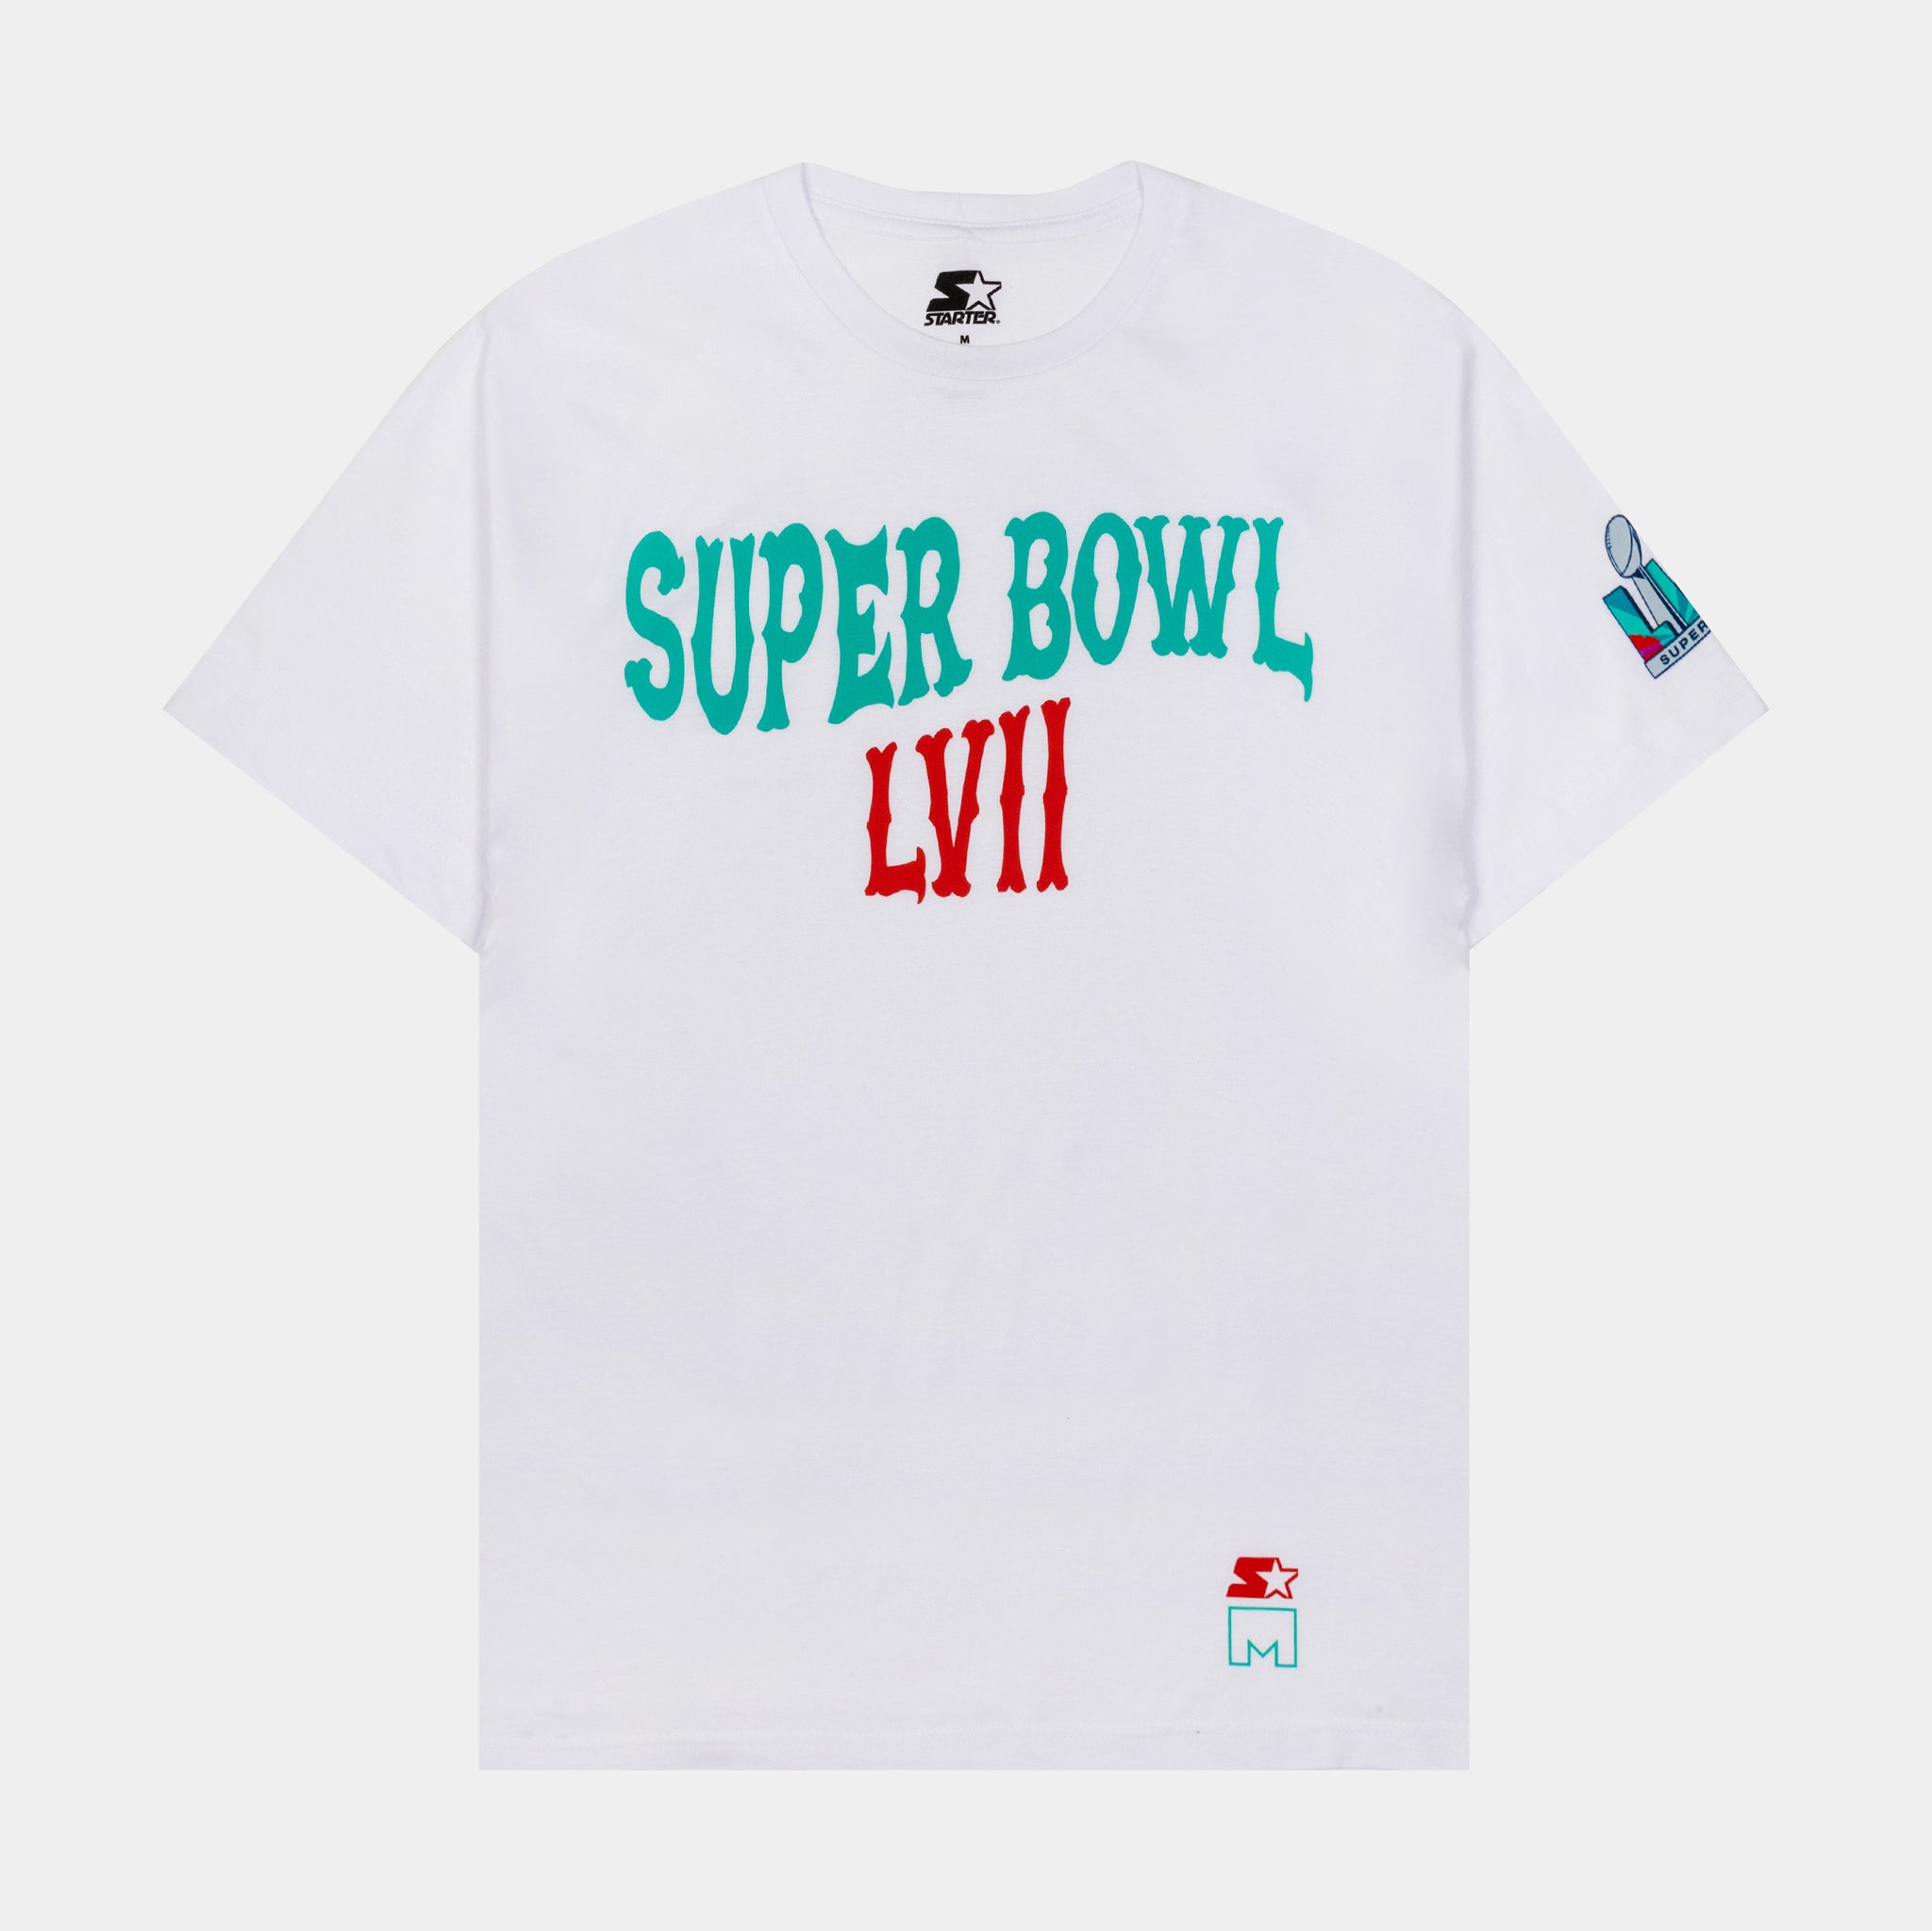 Super Bowl LVII Apparel, Super Bowl Clothing & Gear